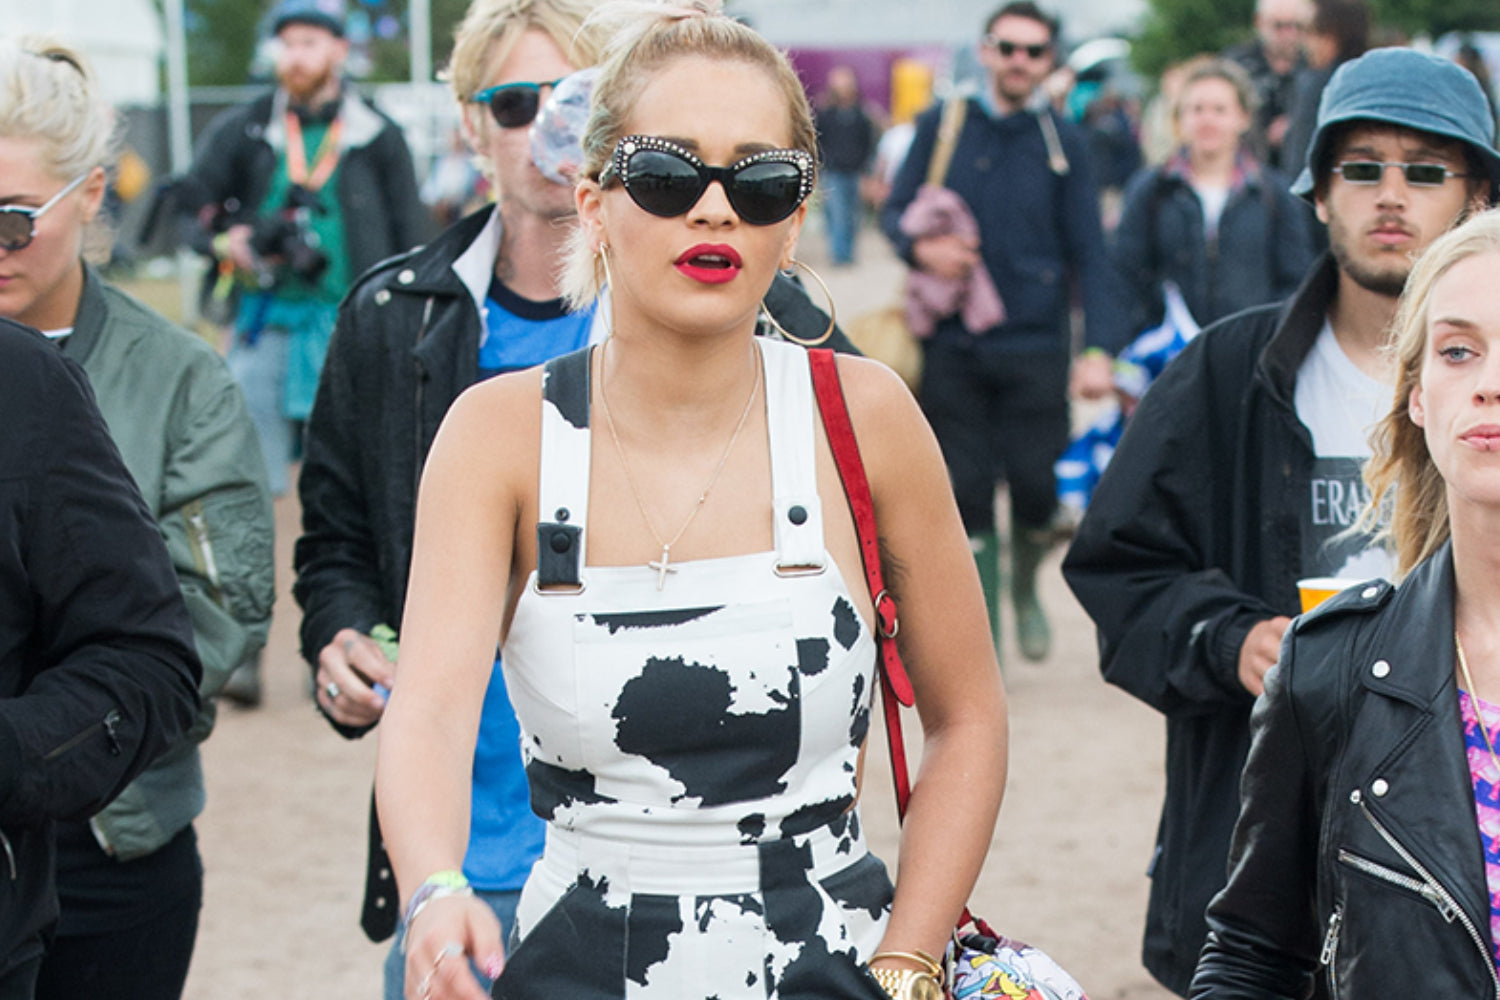 Rita Ora's black embellished sunglasses